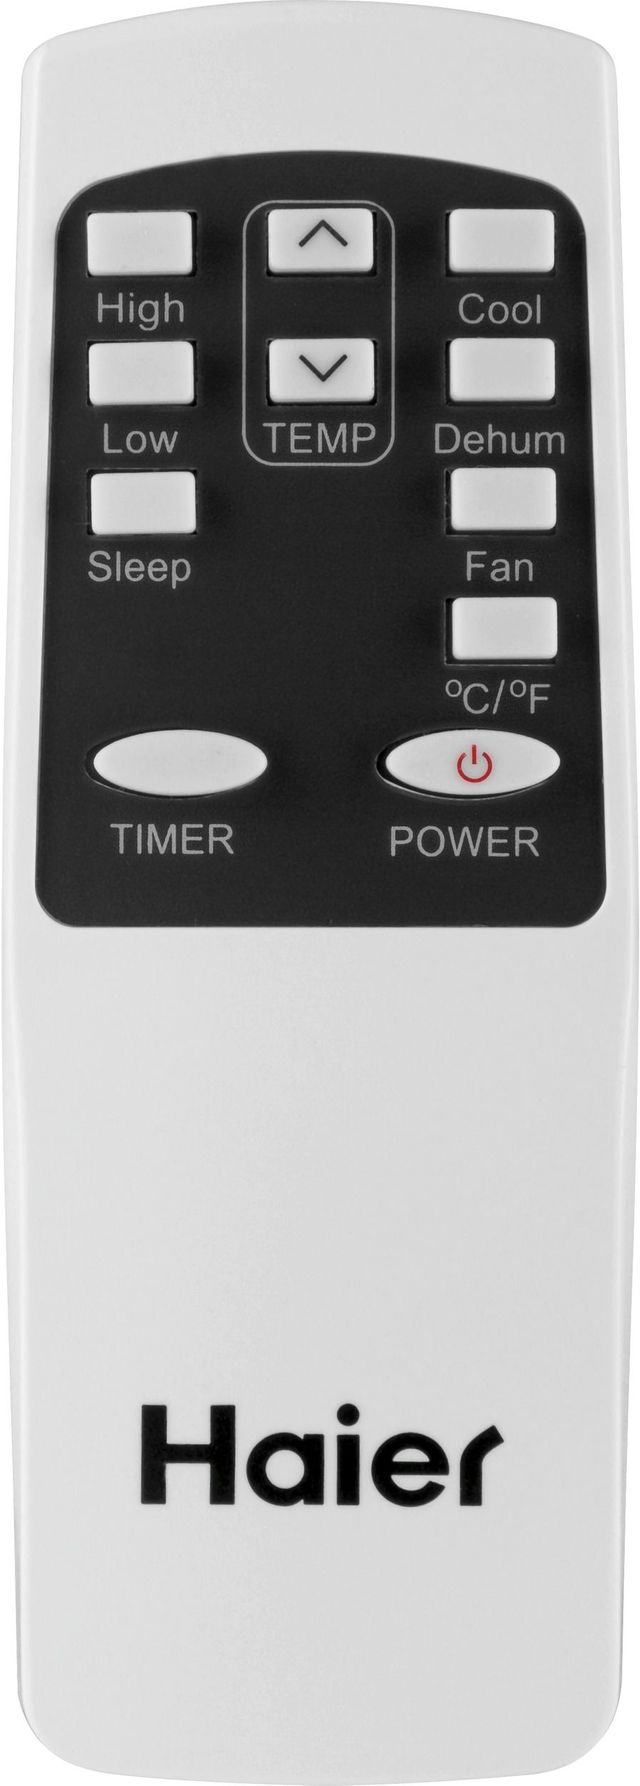 Haier White Portable Air Conditioner 4